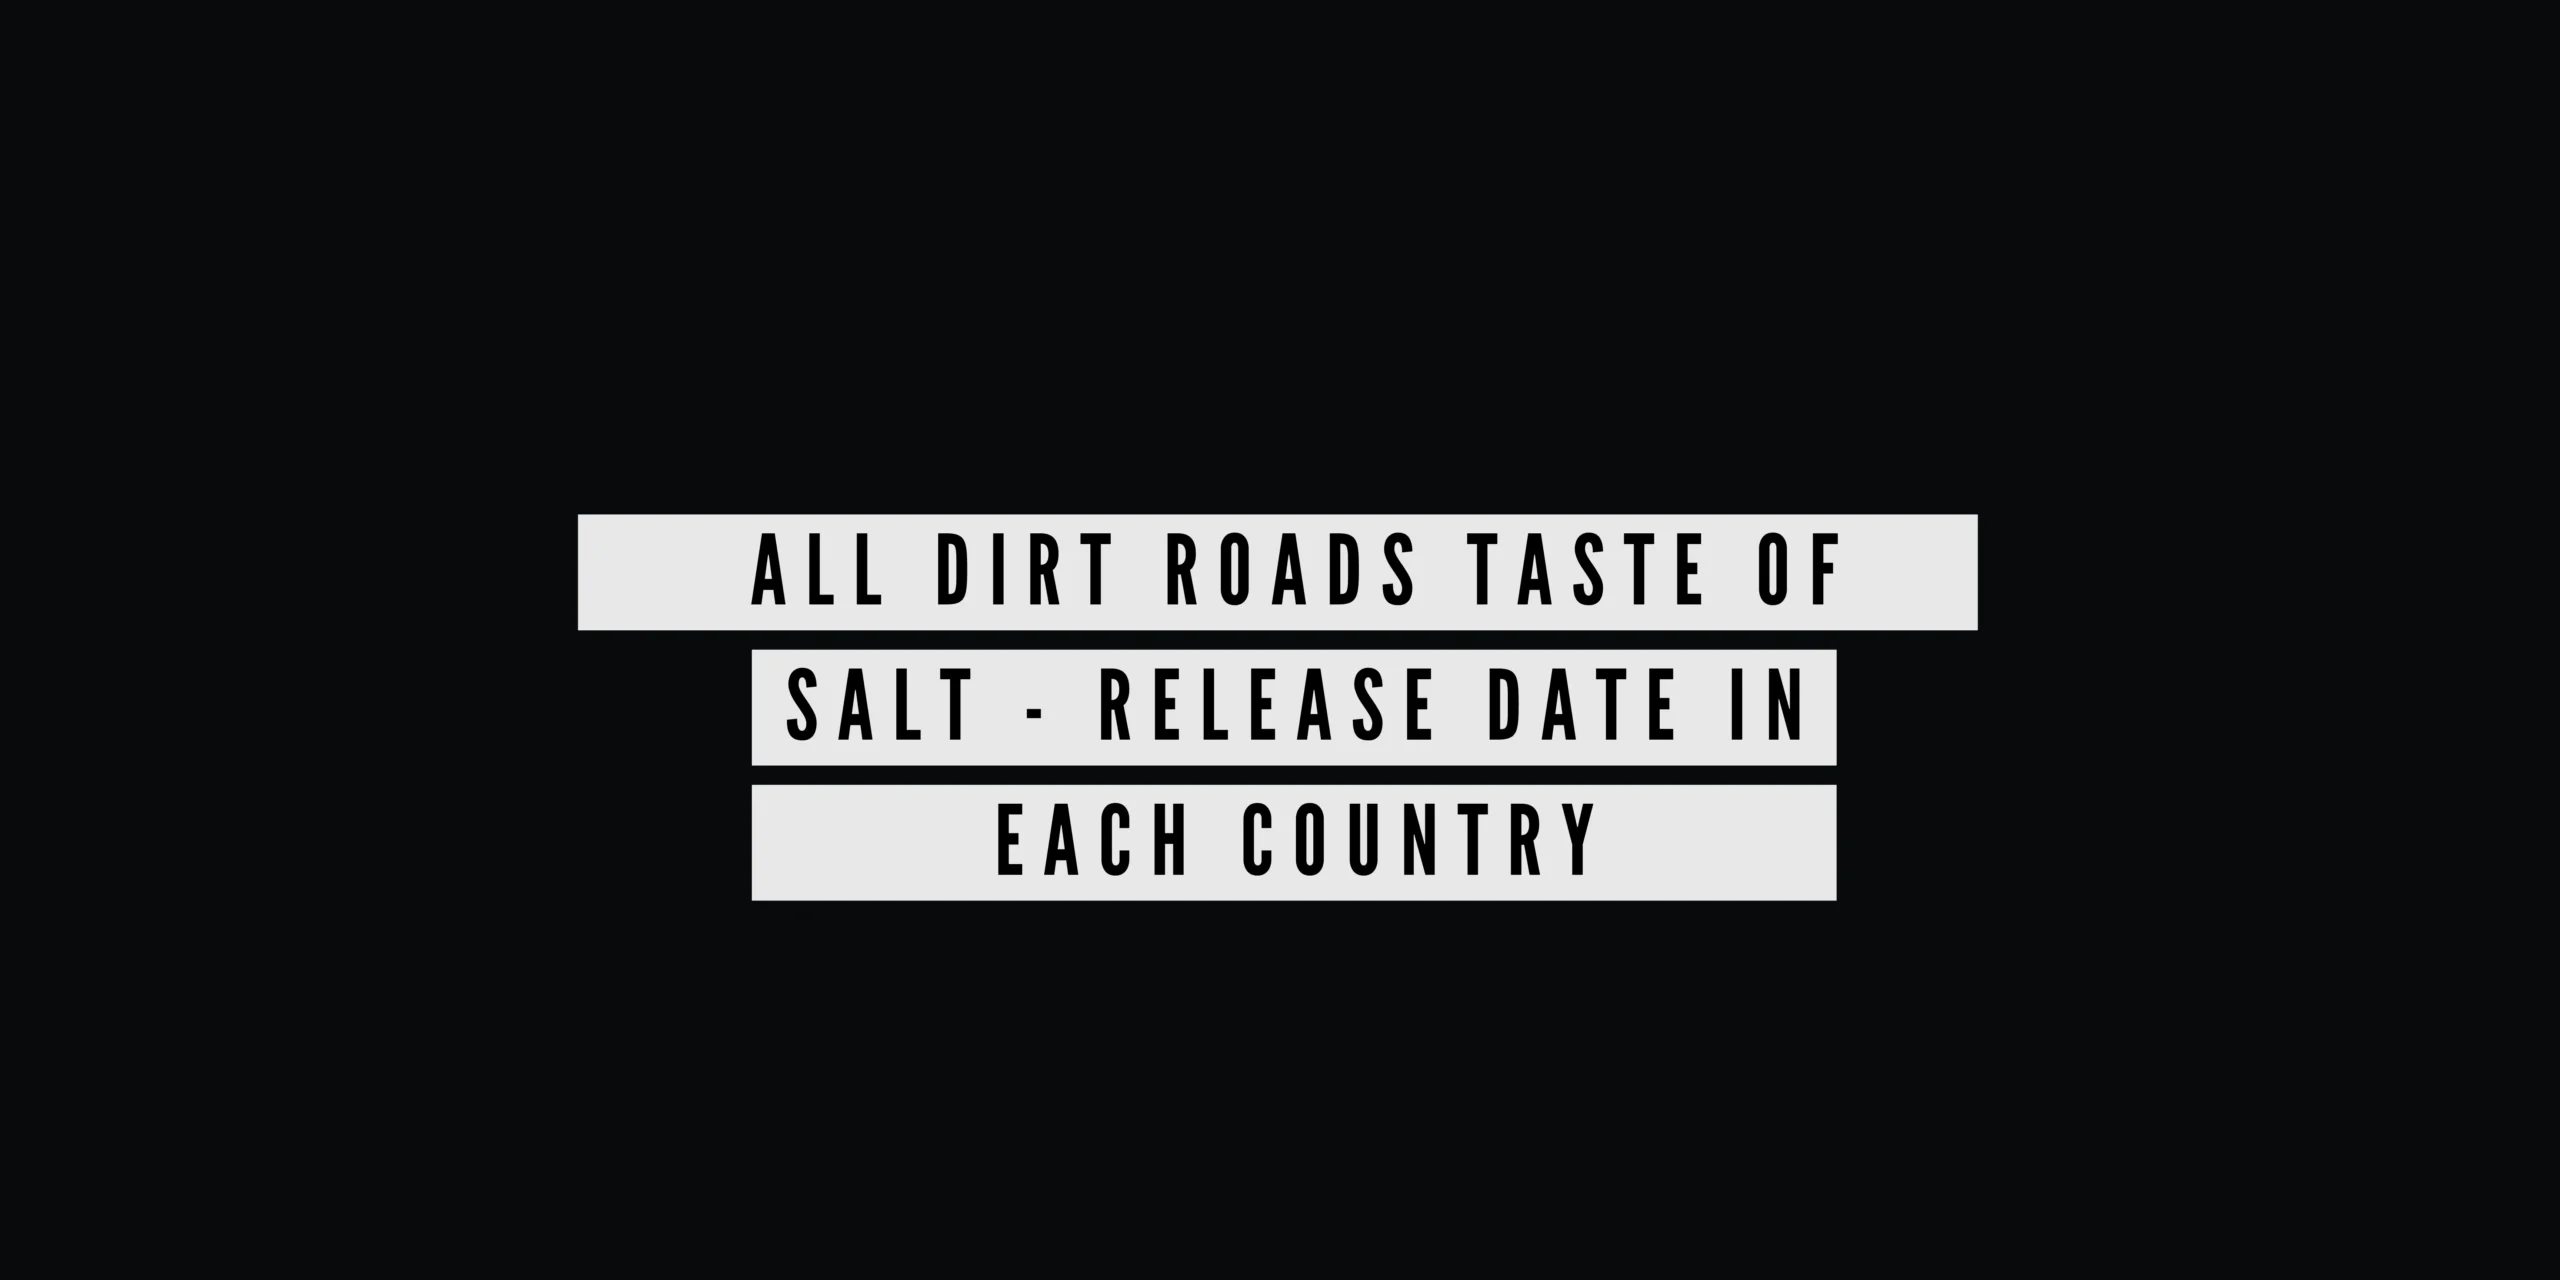 All Dirt Roads Taste of Salt - Release Date In Each Country